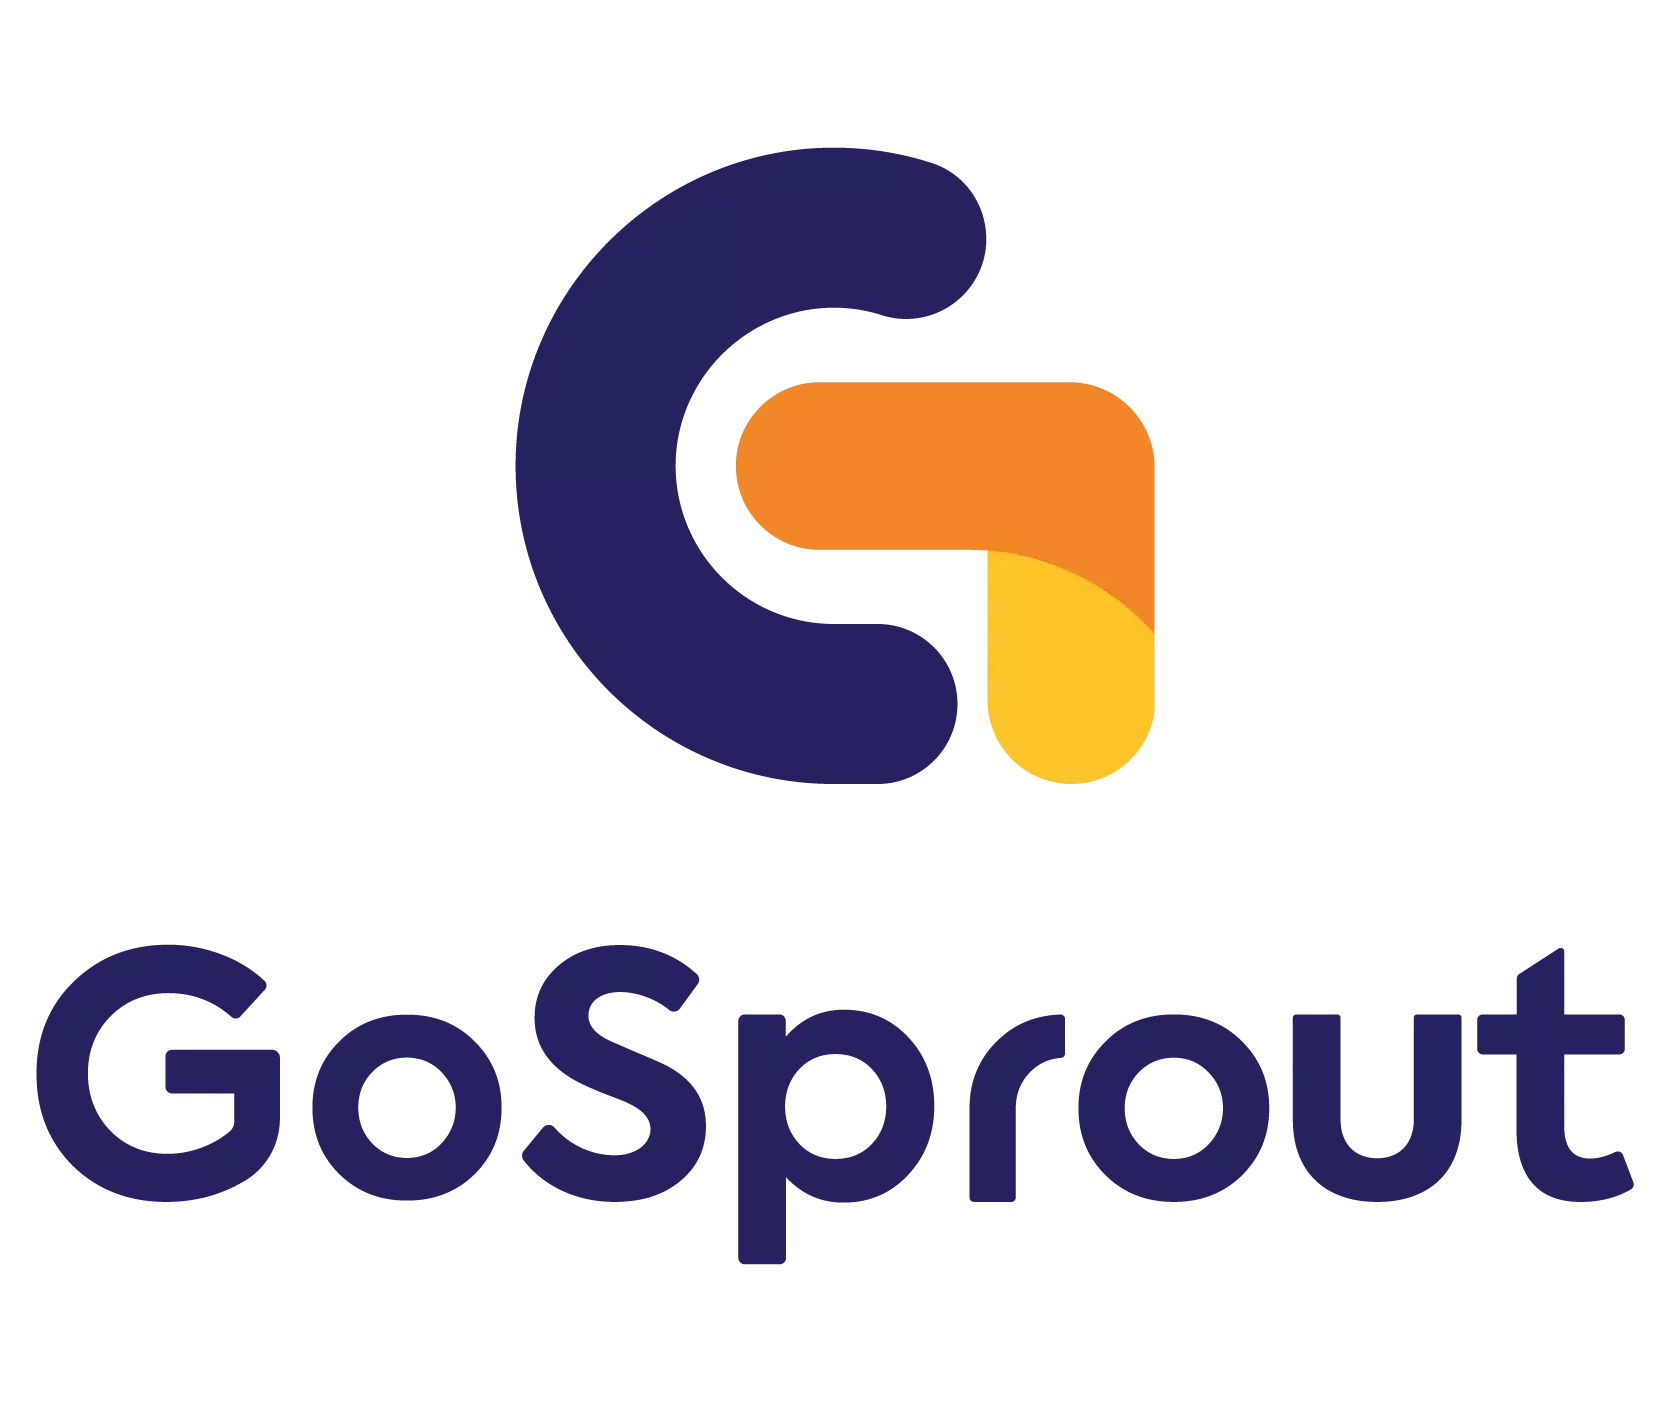 Gosprout logo